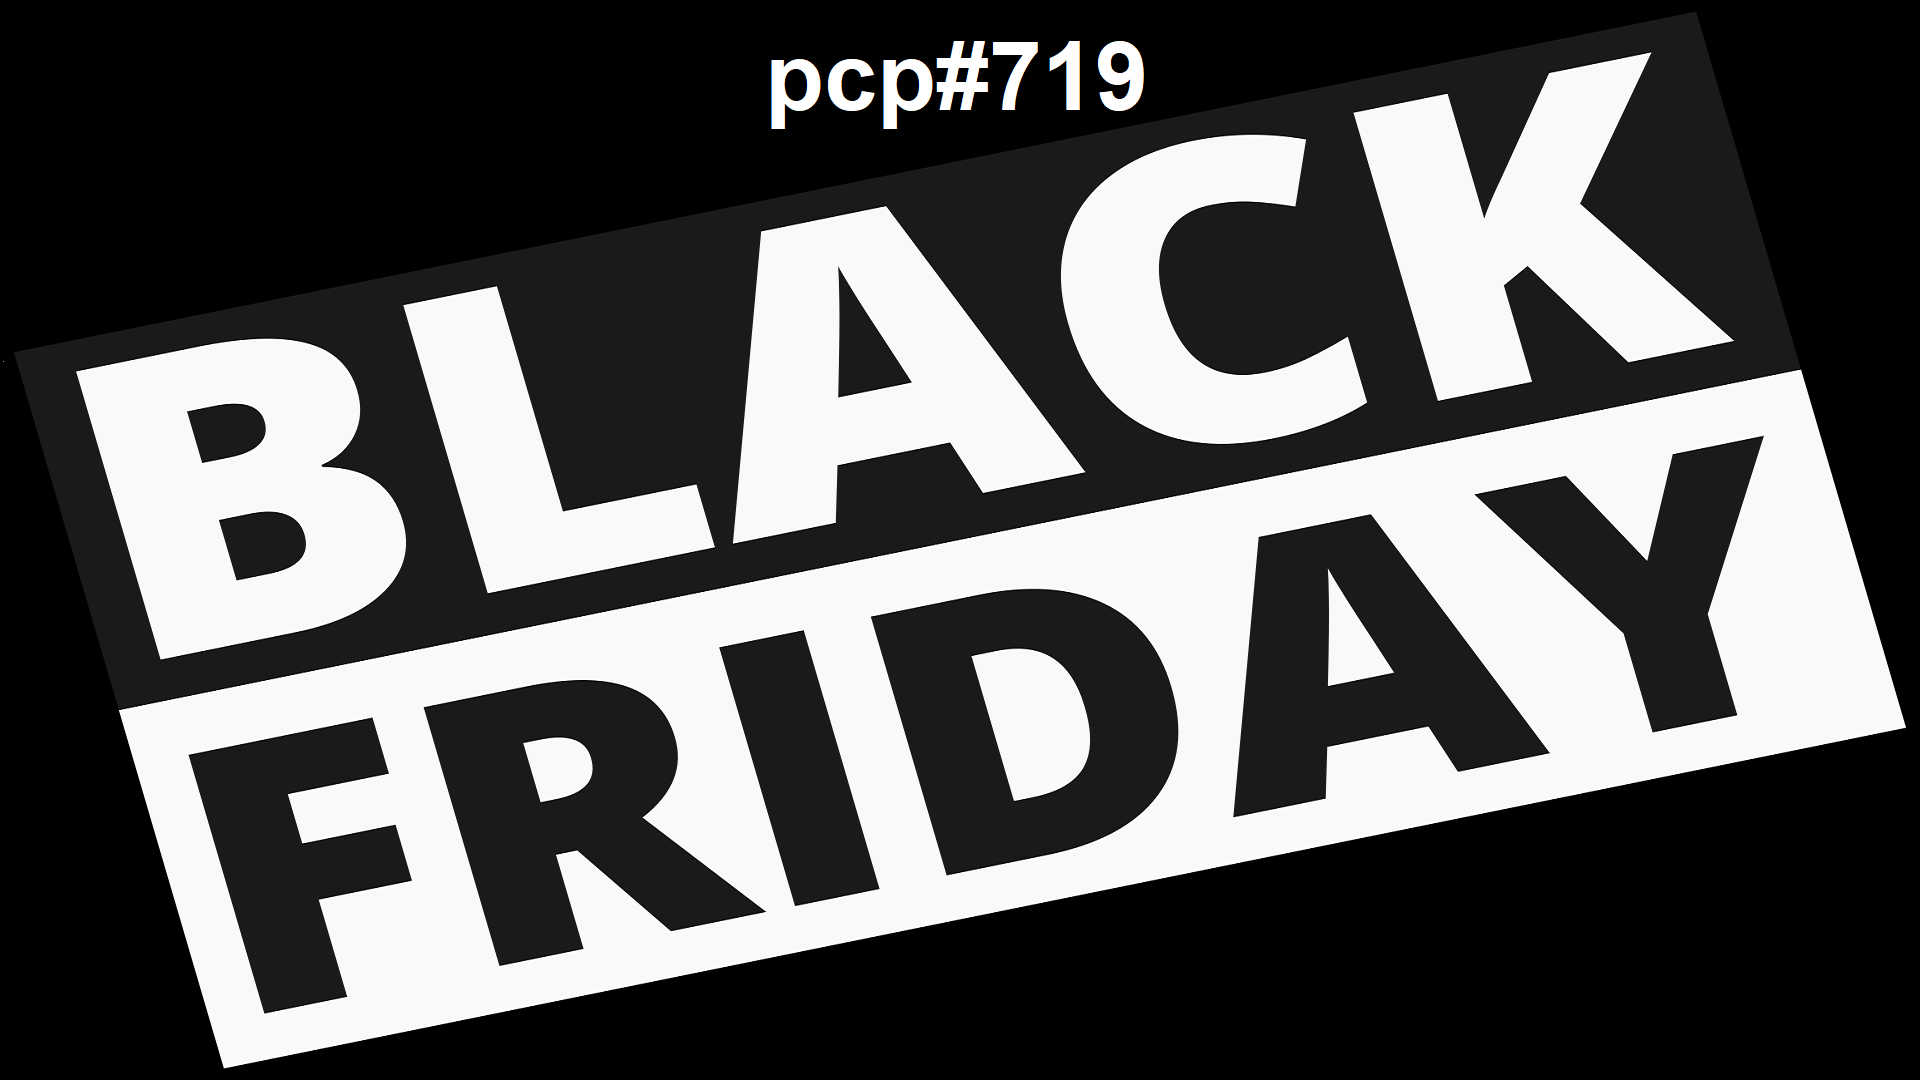 PCP#719... Black Friday....